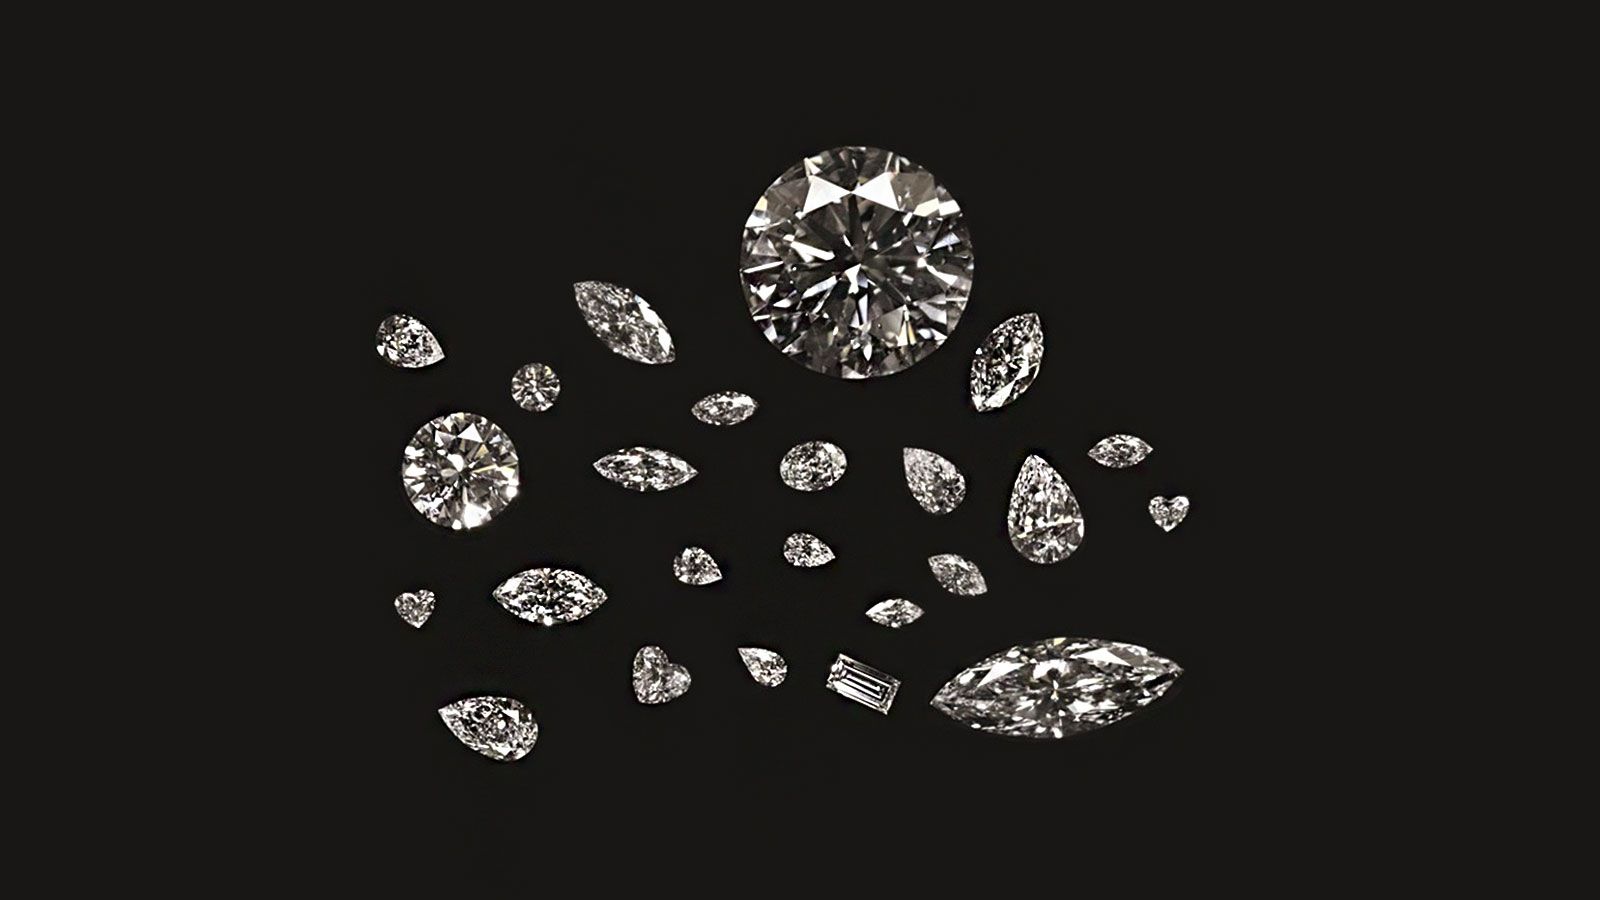 A Quadrillion Tons of Diamonds Lurk Deep Inside Earth